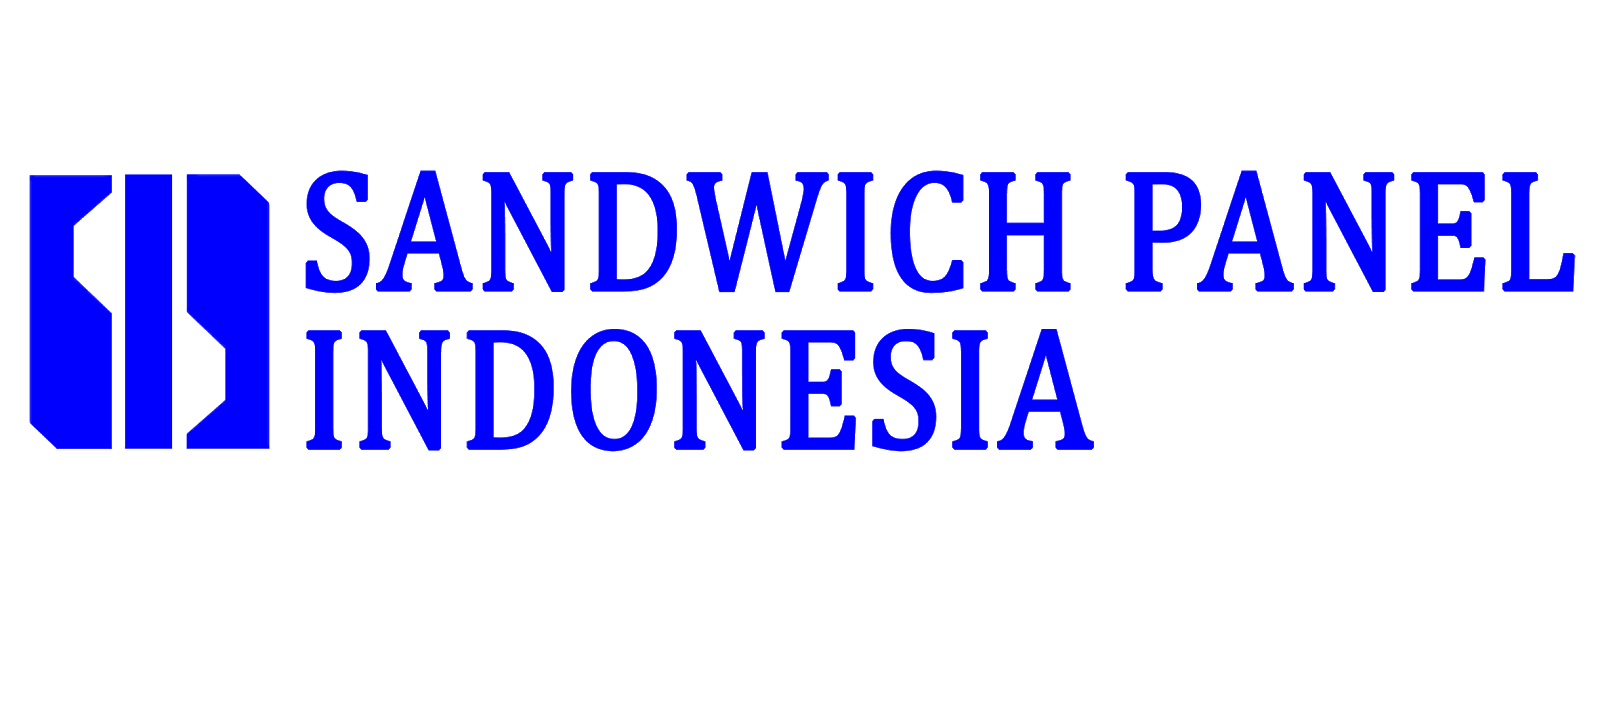 Sandwich Panel Indonesia